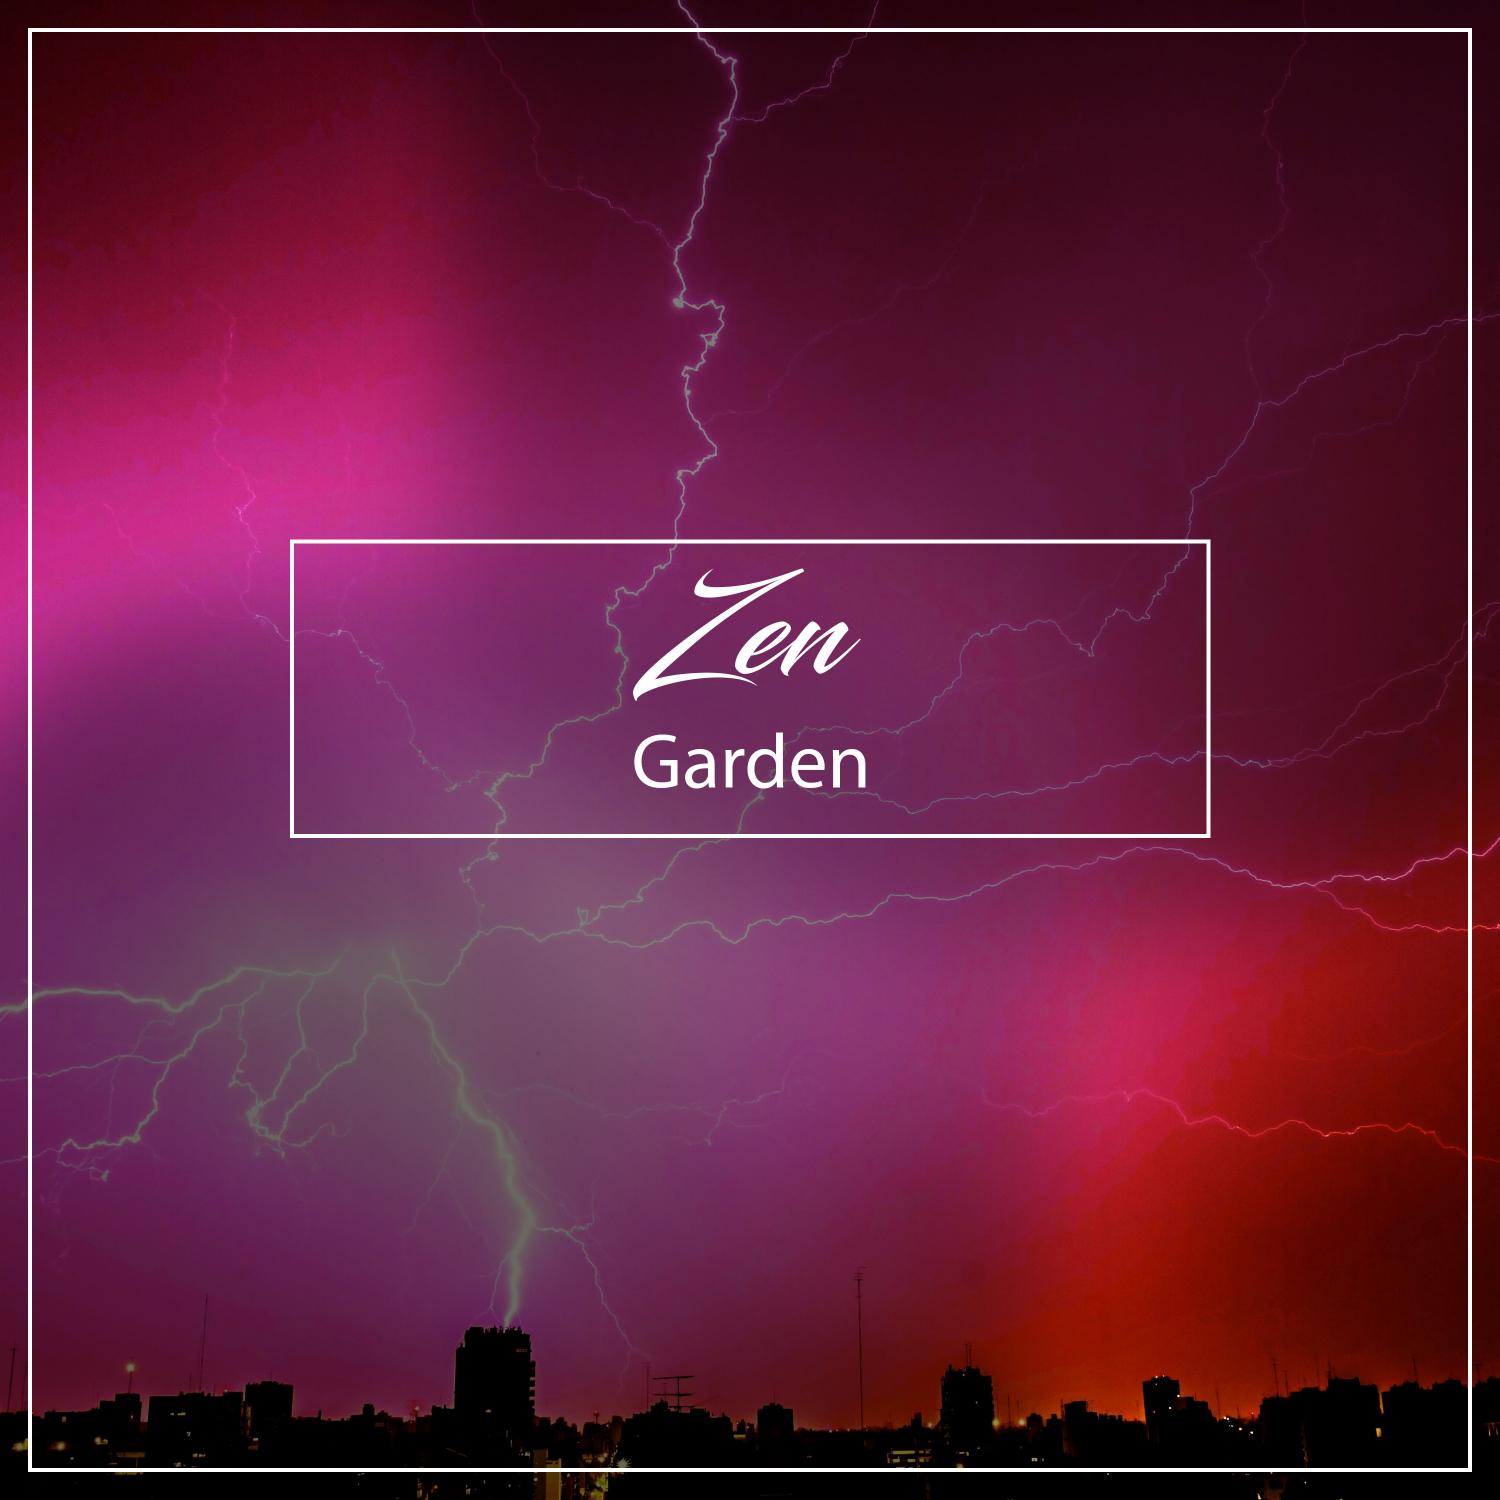 #15 White Noise Nature Sounds - Zen Garden Rain